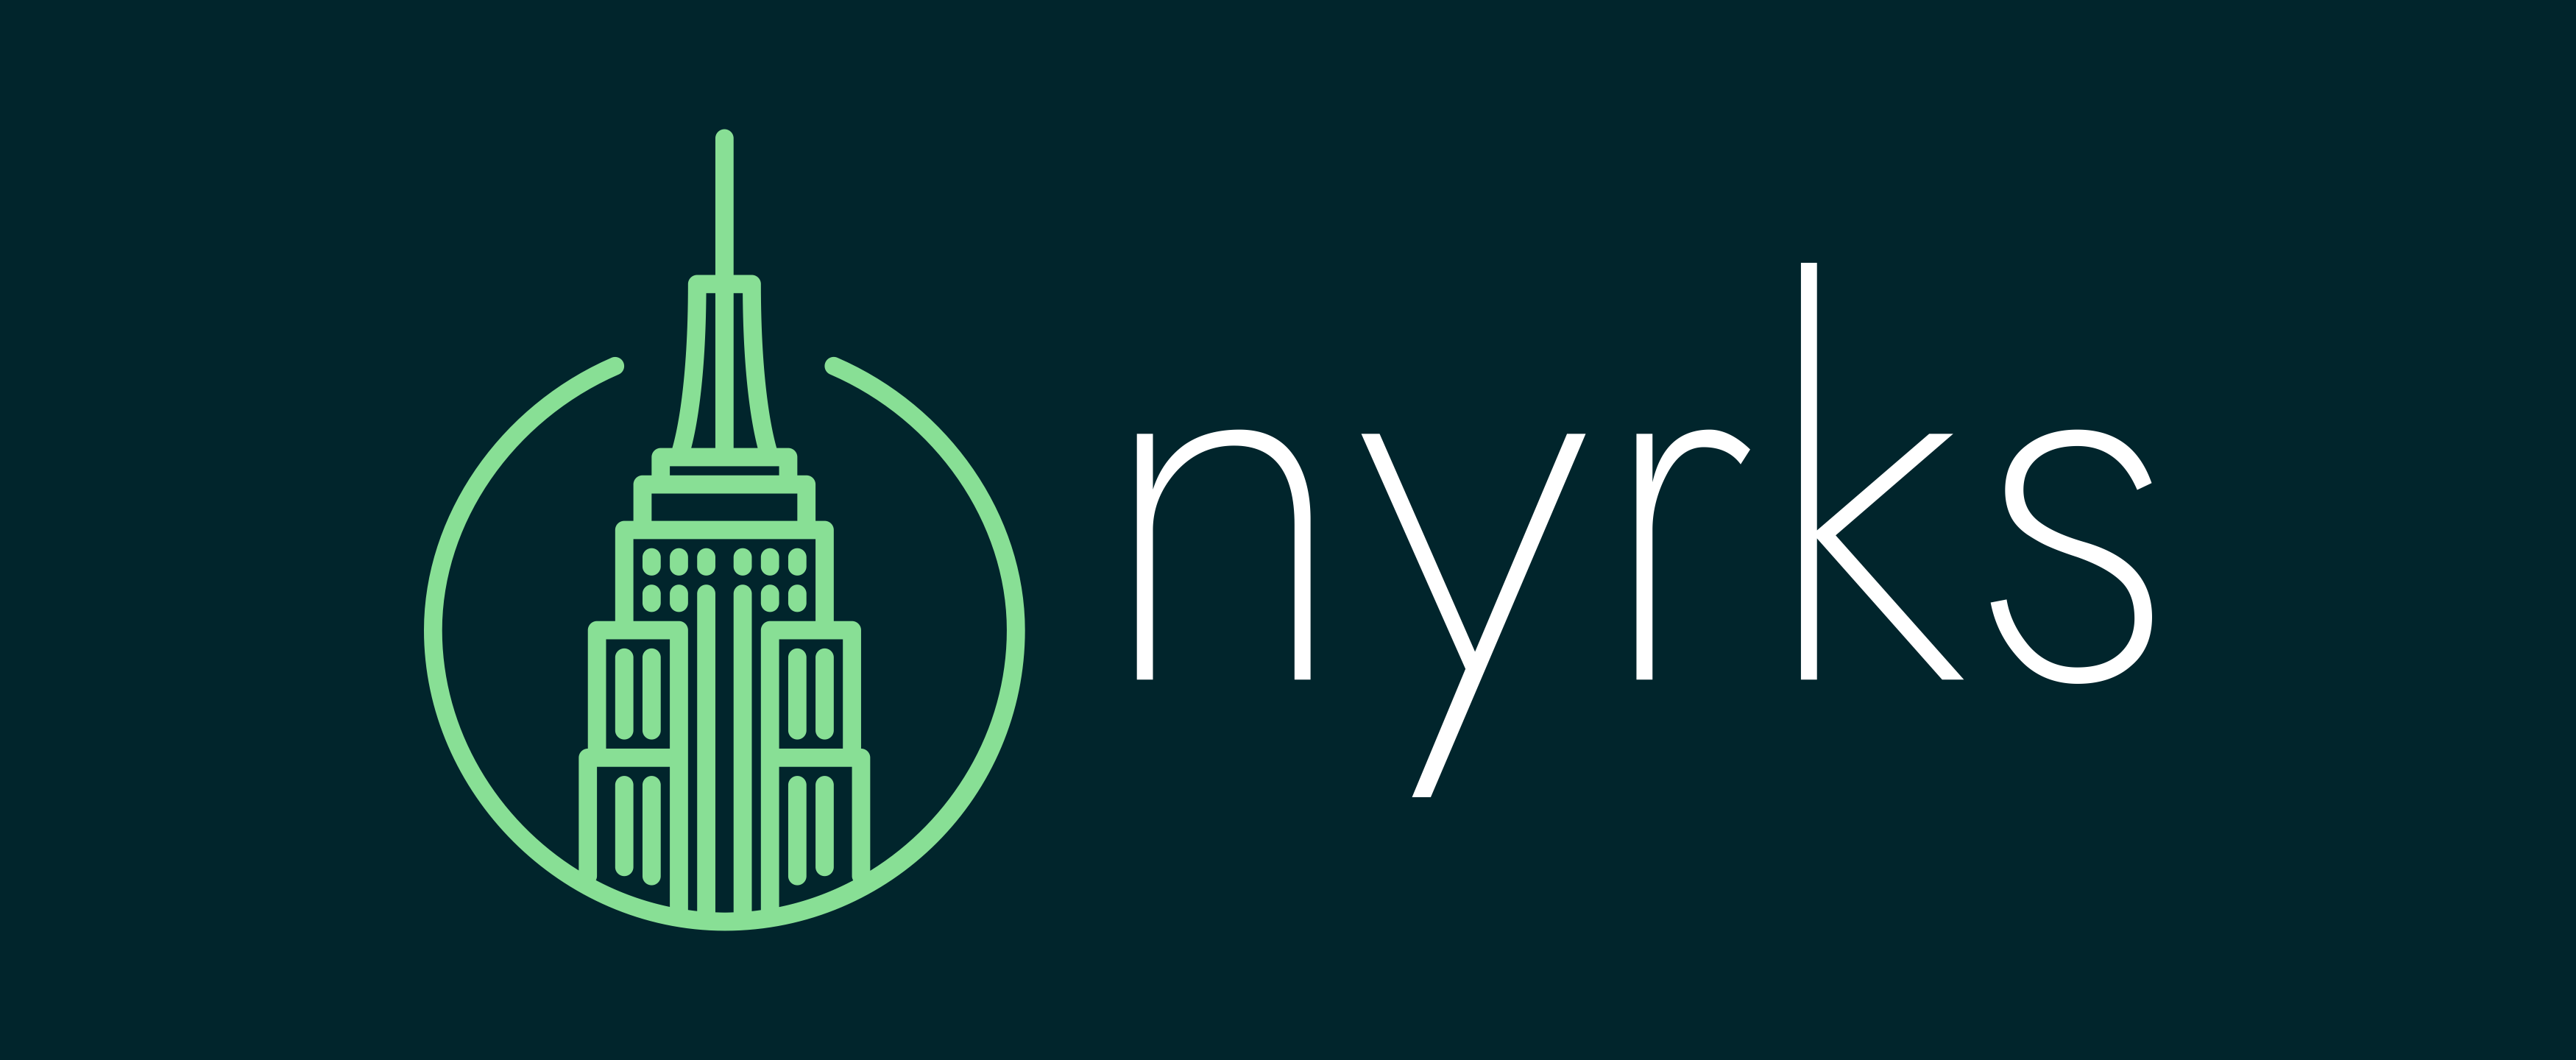 Nyrks Example Branding Photo